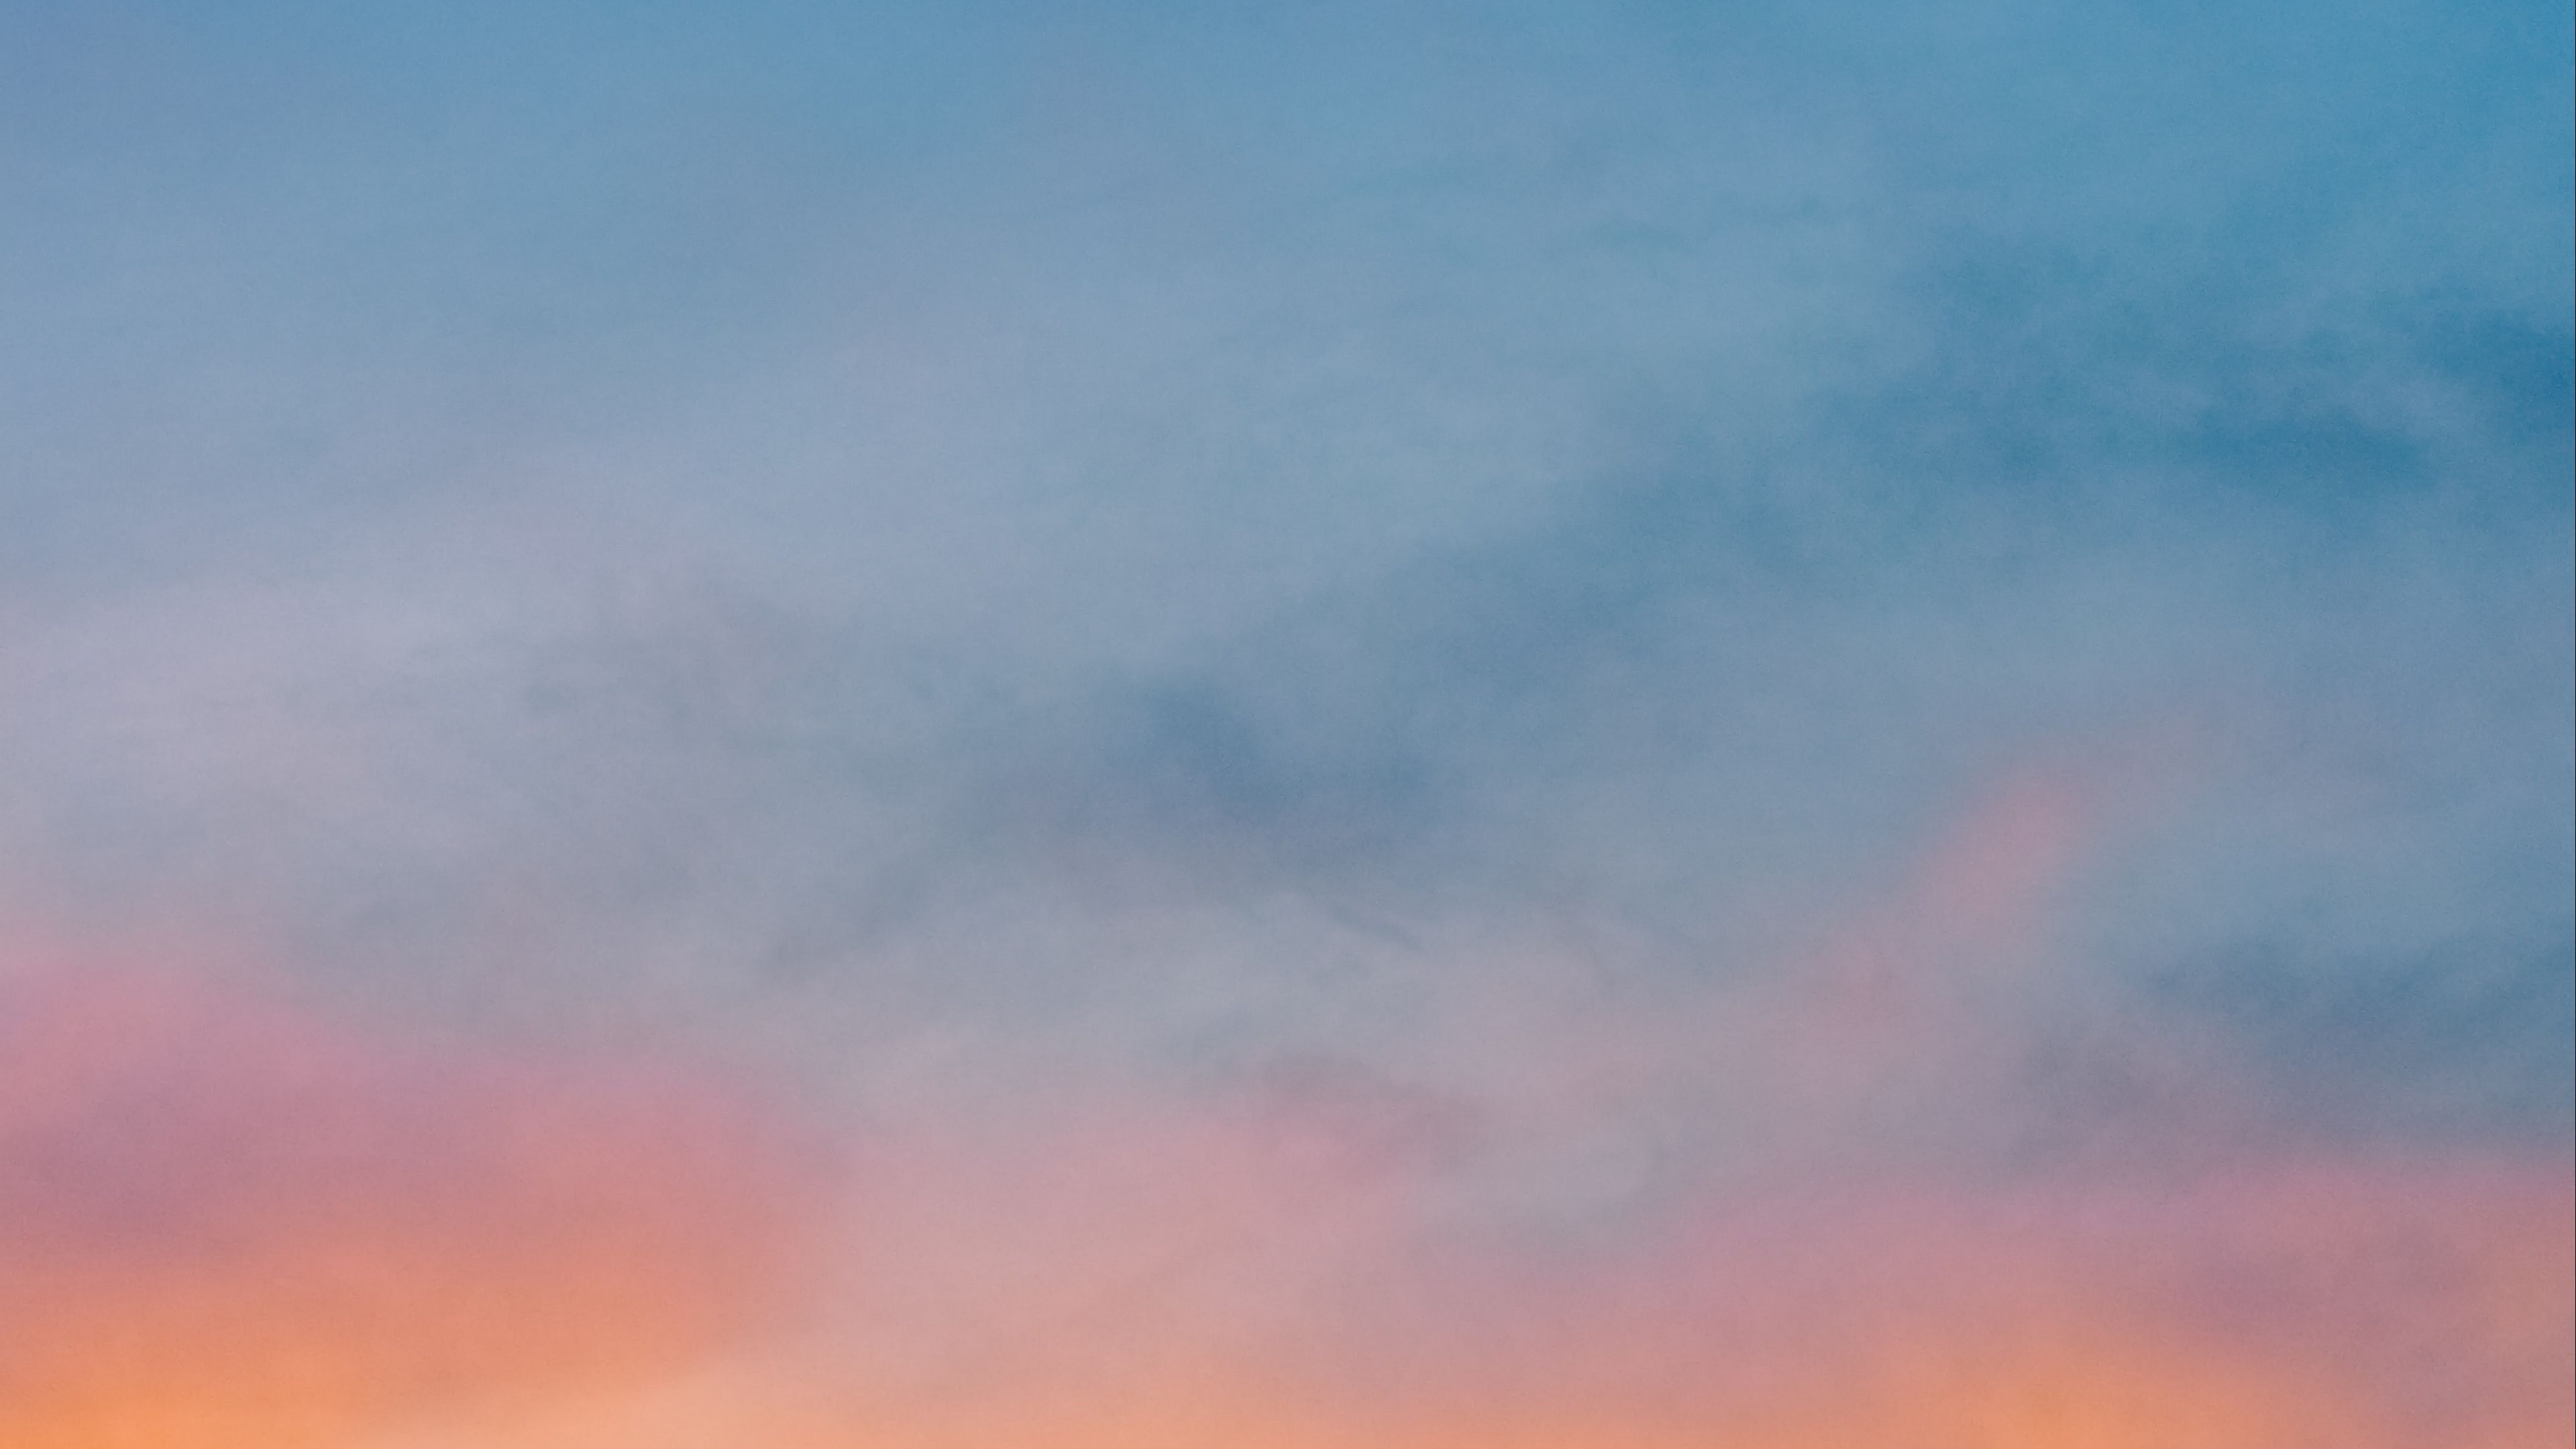 Download wallpaper 3840x2160 sky, gradient, clouds, sunset 4k uhd 16:9 hd  background